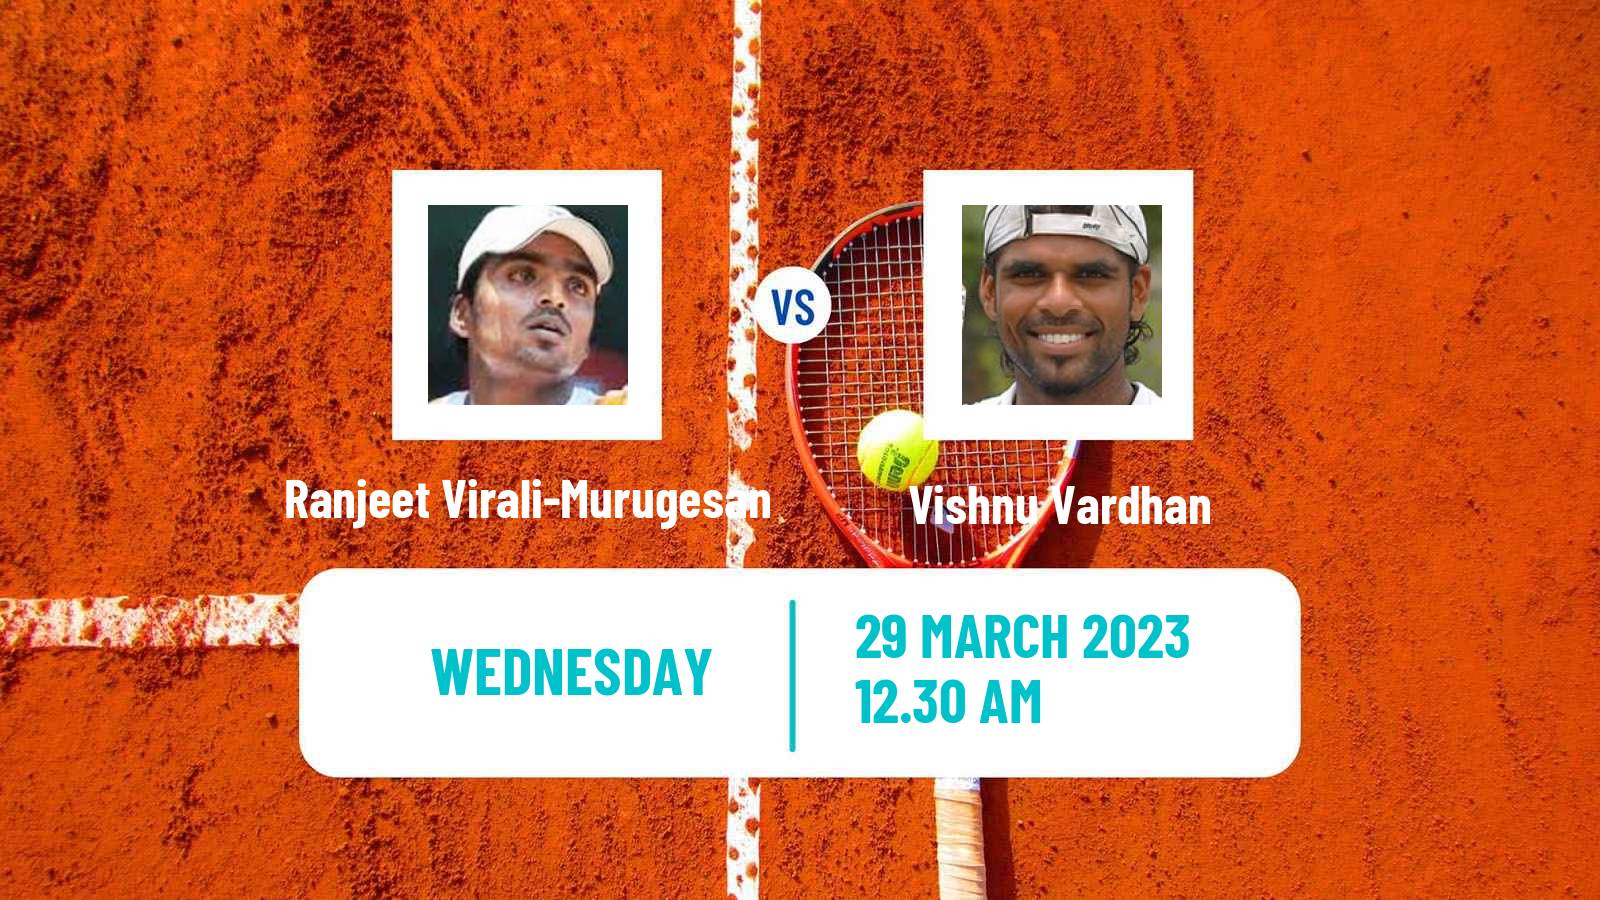 Tennis ITF Tournaments Ranjeet Virali-Murugesan - Vishnu Vardhan